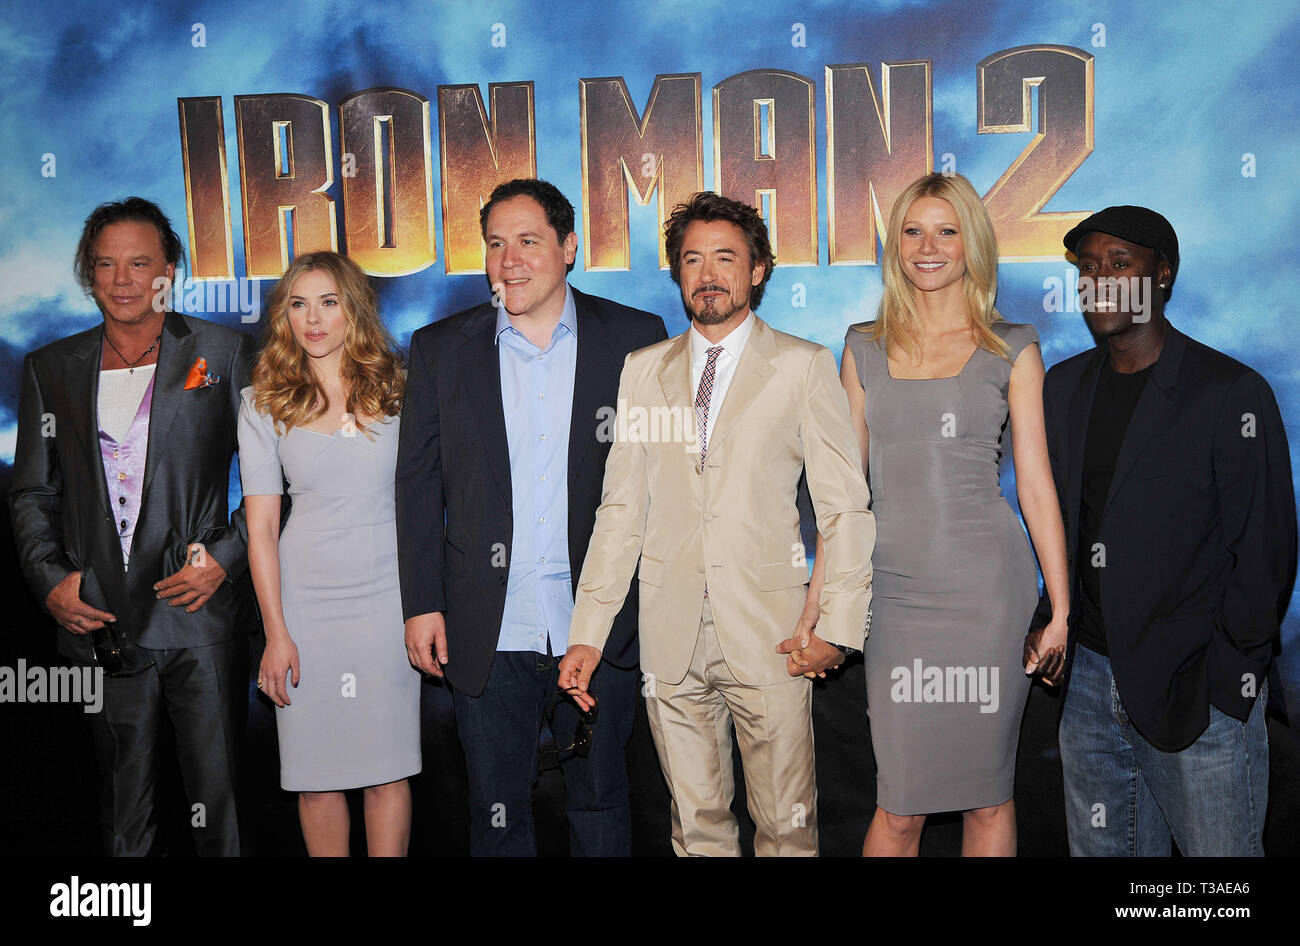 01 Cast Iron Man 2 01 - IRON MAN 2 Photo Call at the Four Seasons ...